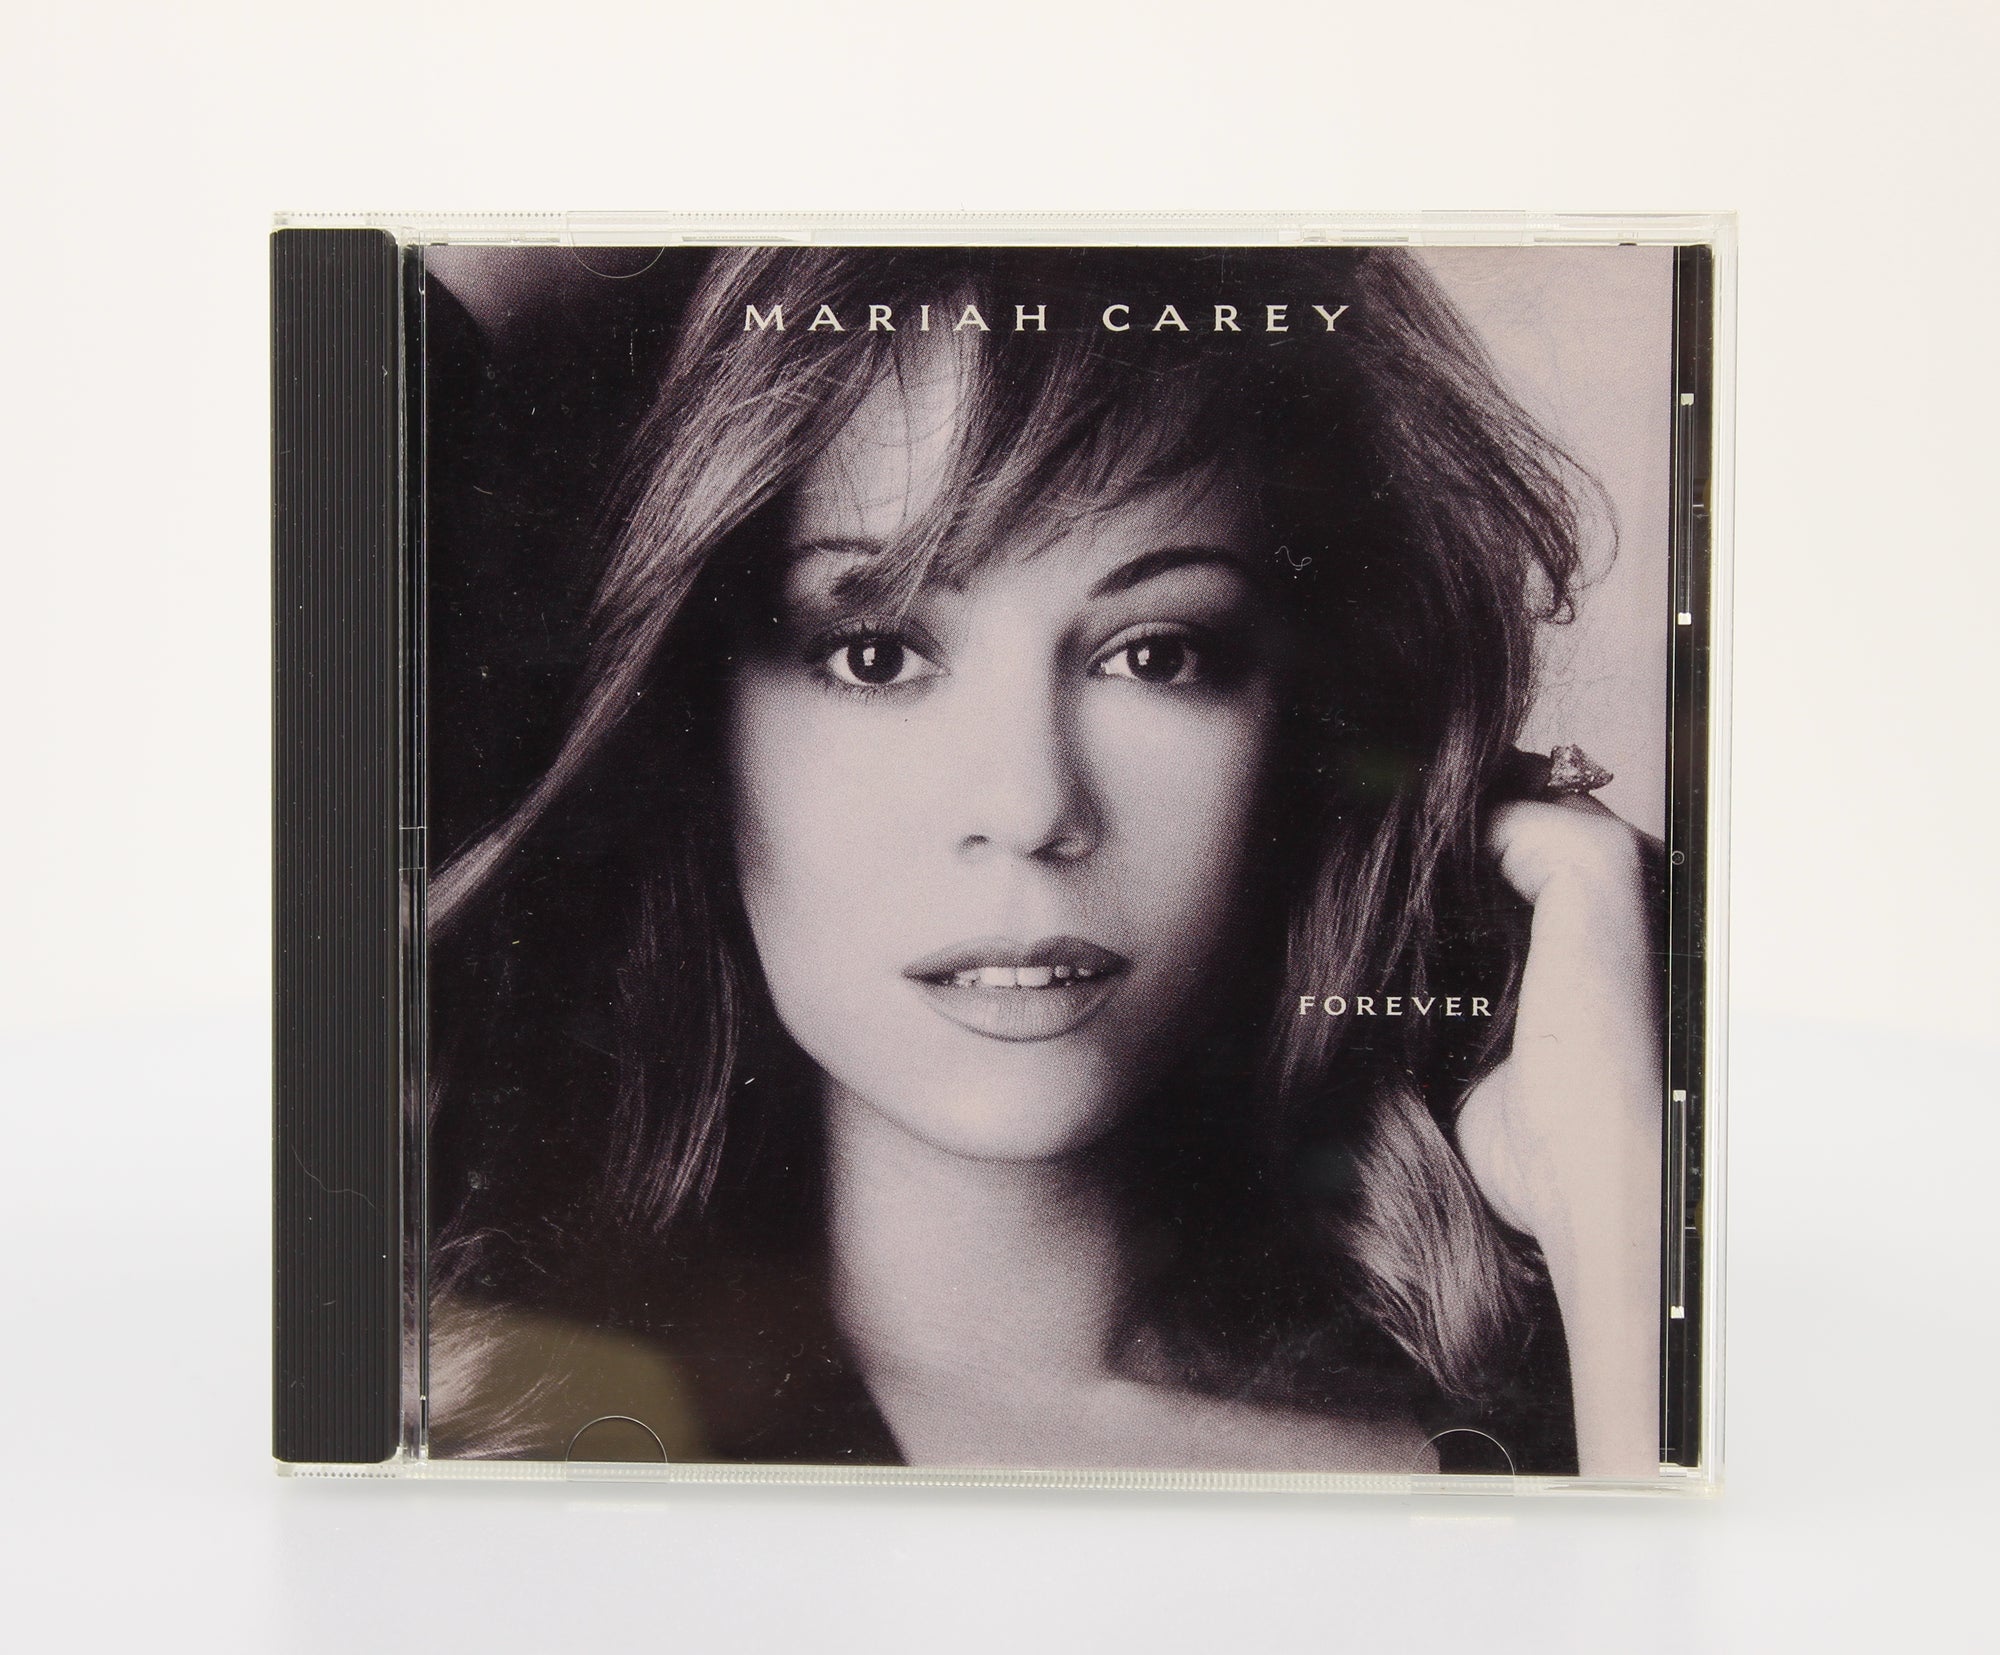 Mariah Carey, Someday, CD Maxi Single PROMO, Australia 1991 